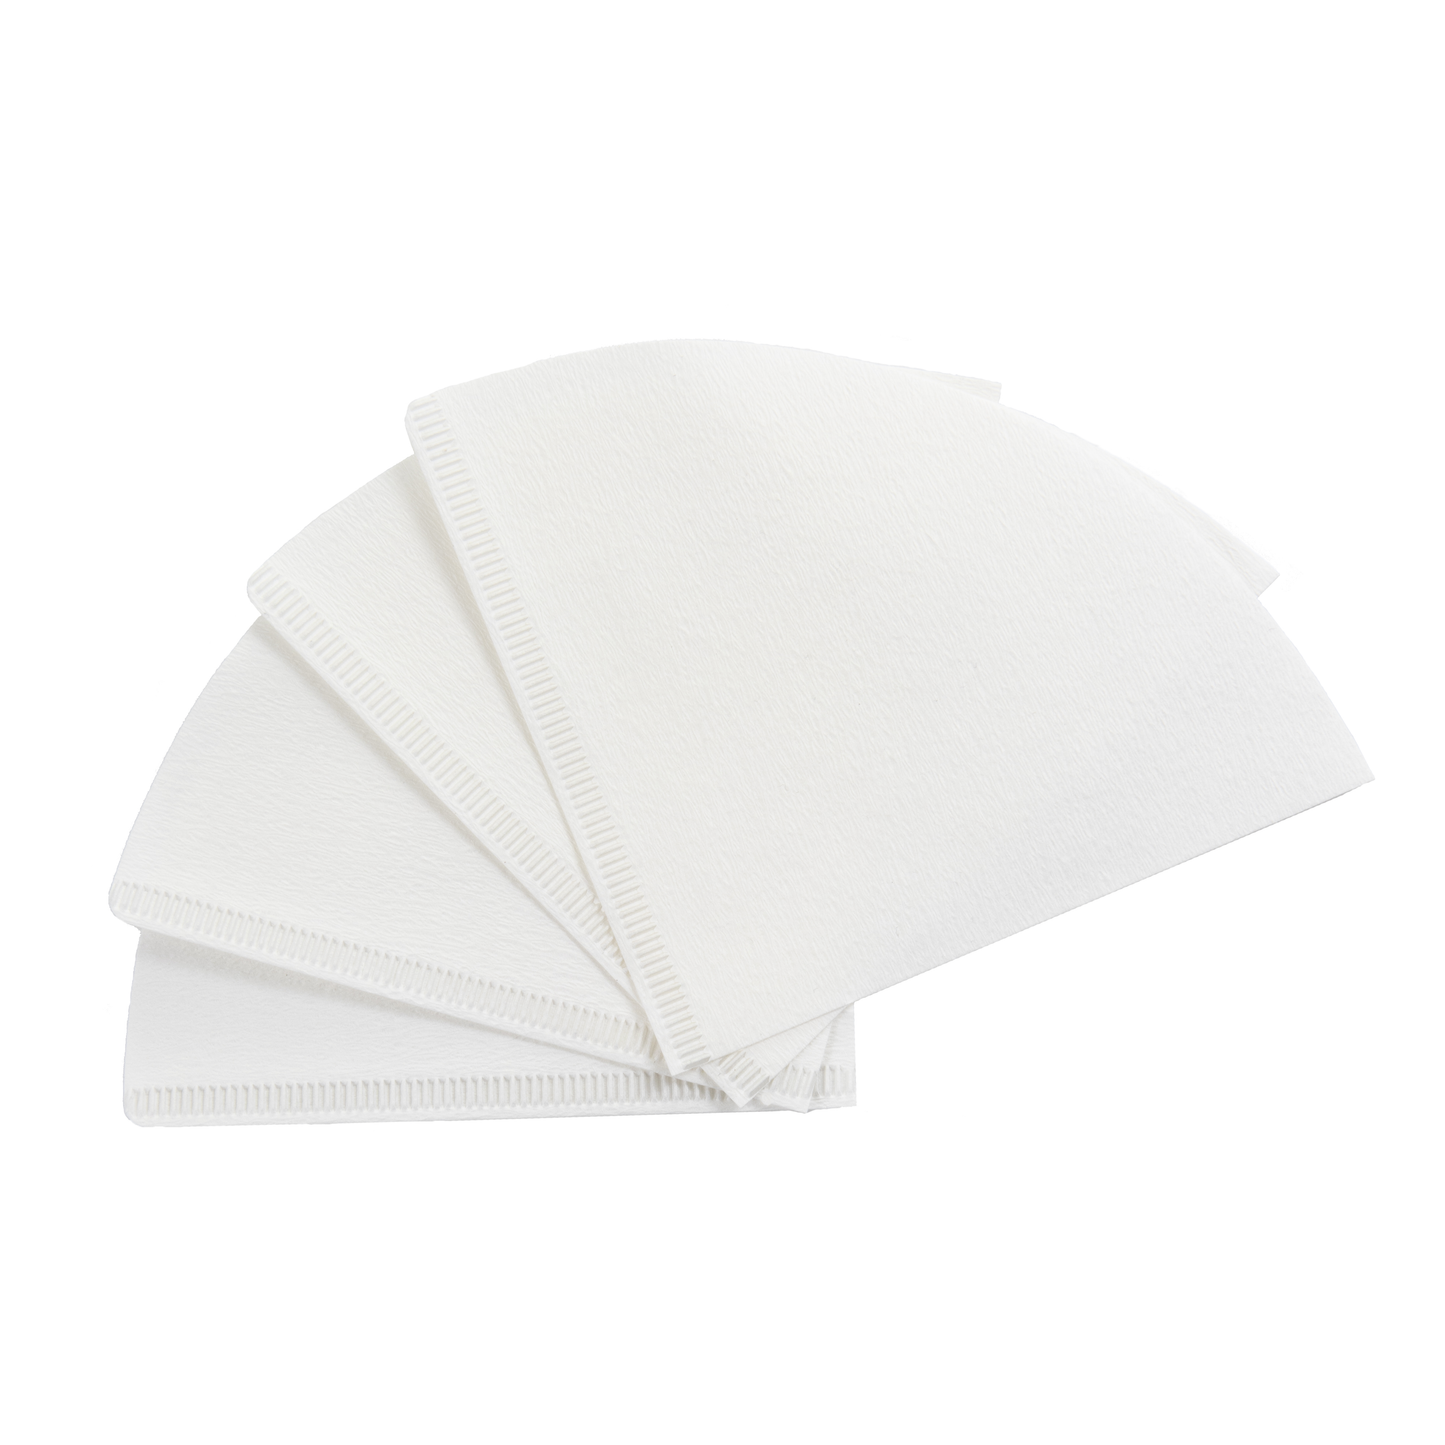 Hario V60 | Paper Filter | Size 02 | 100ct | White